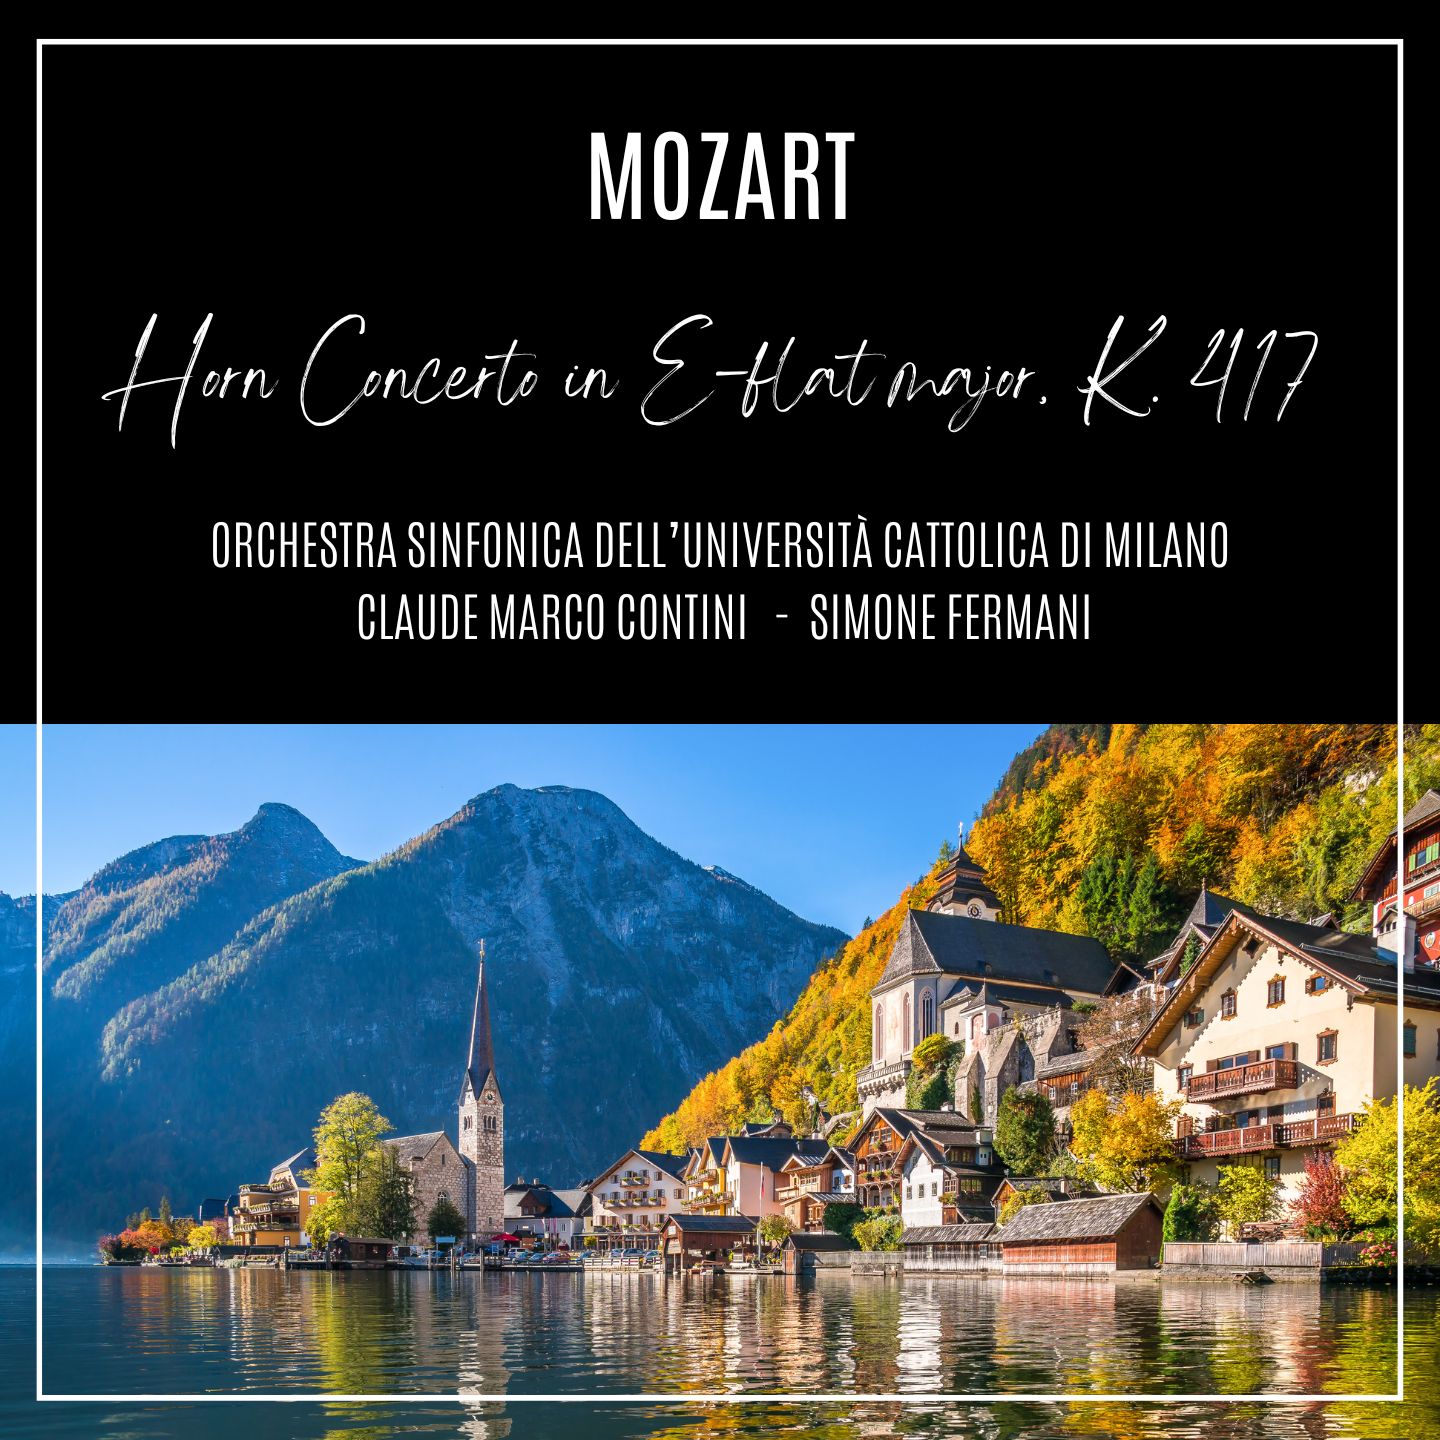 Horn Concerto in E-flat major, K. 417